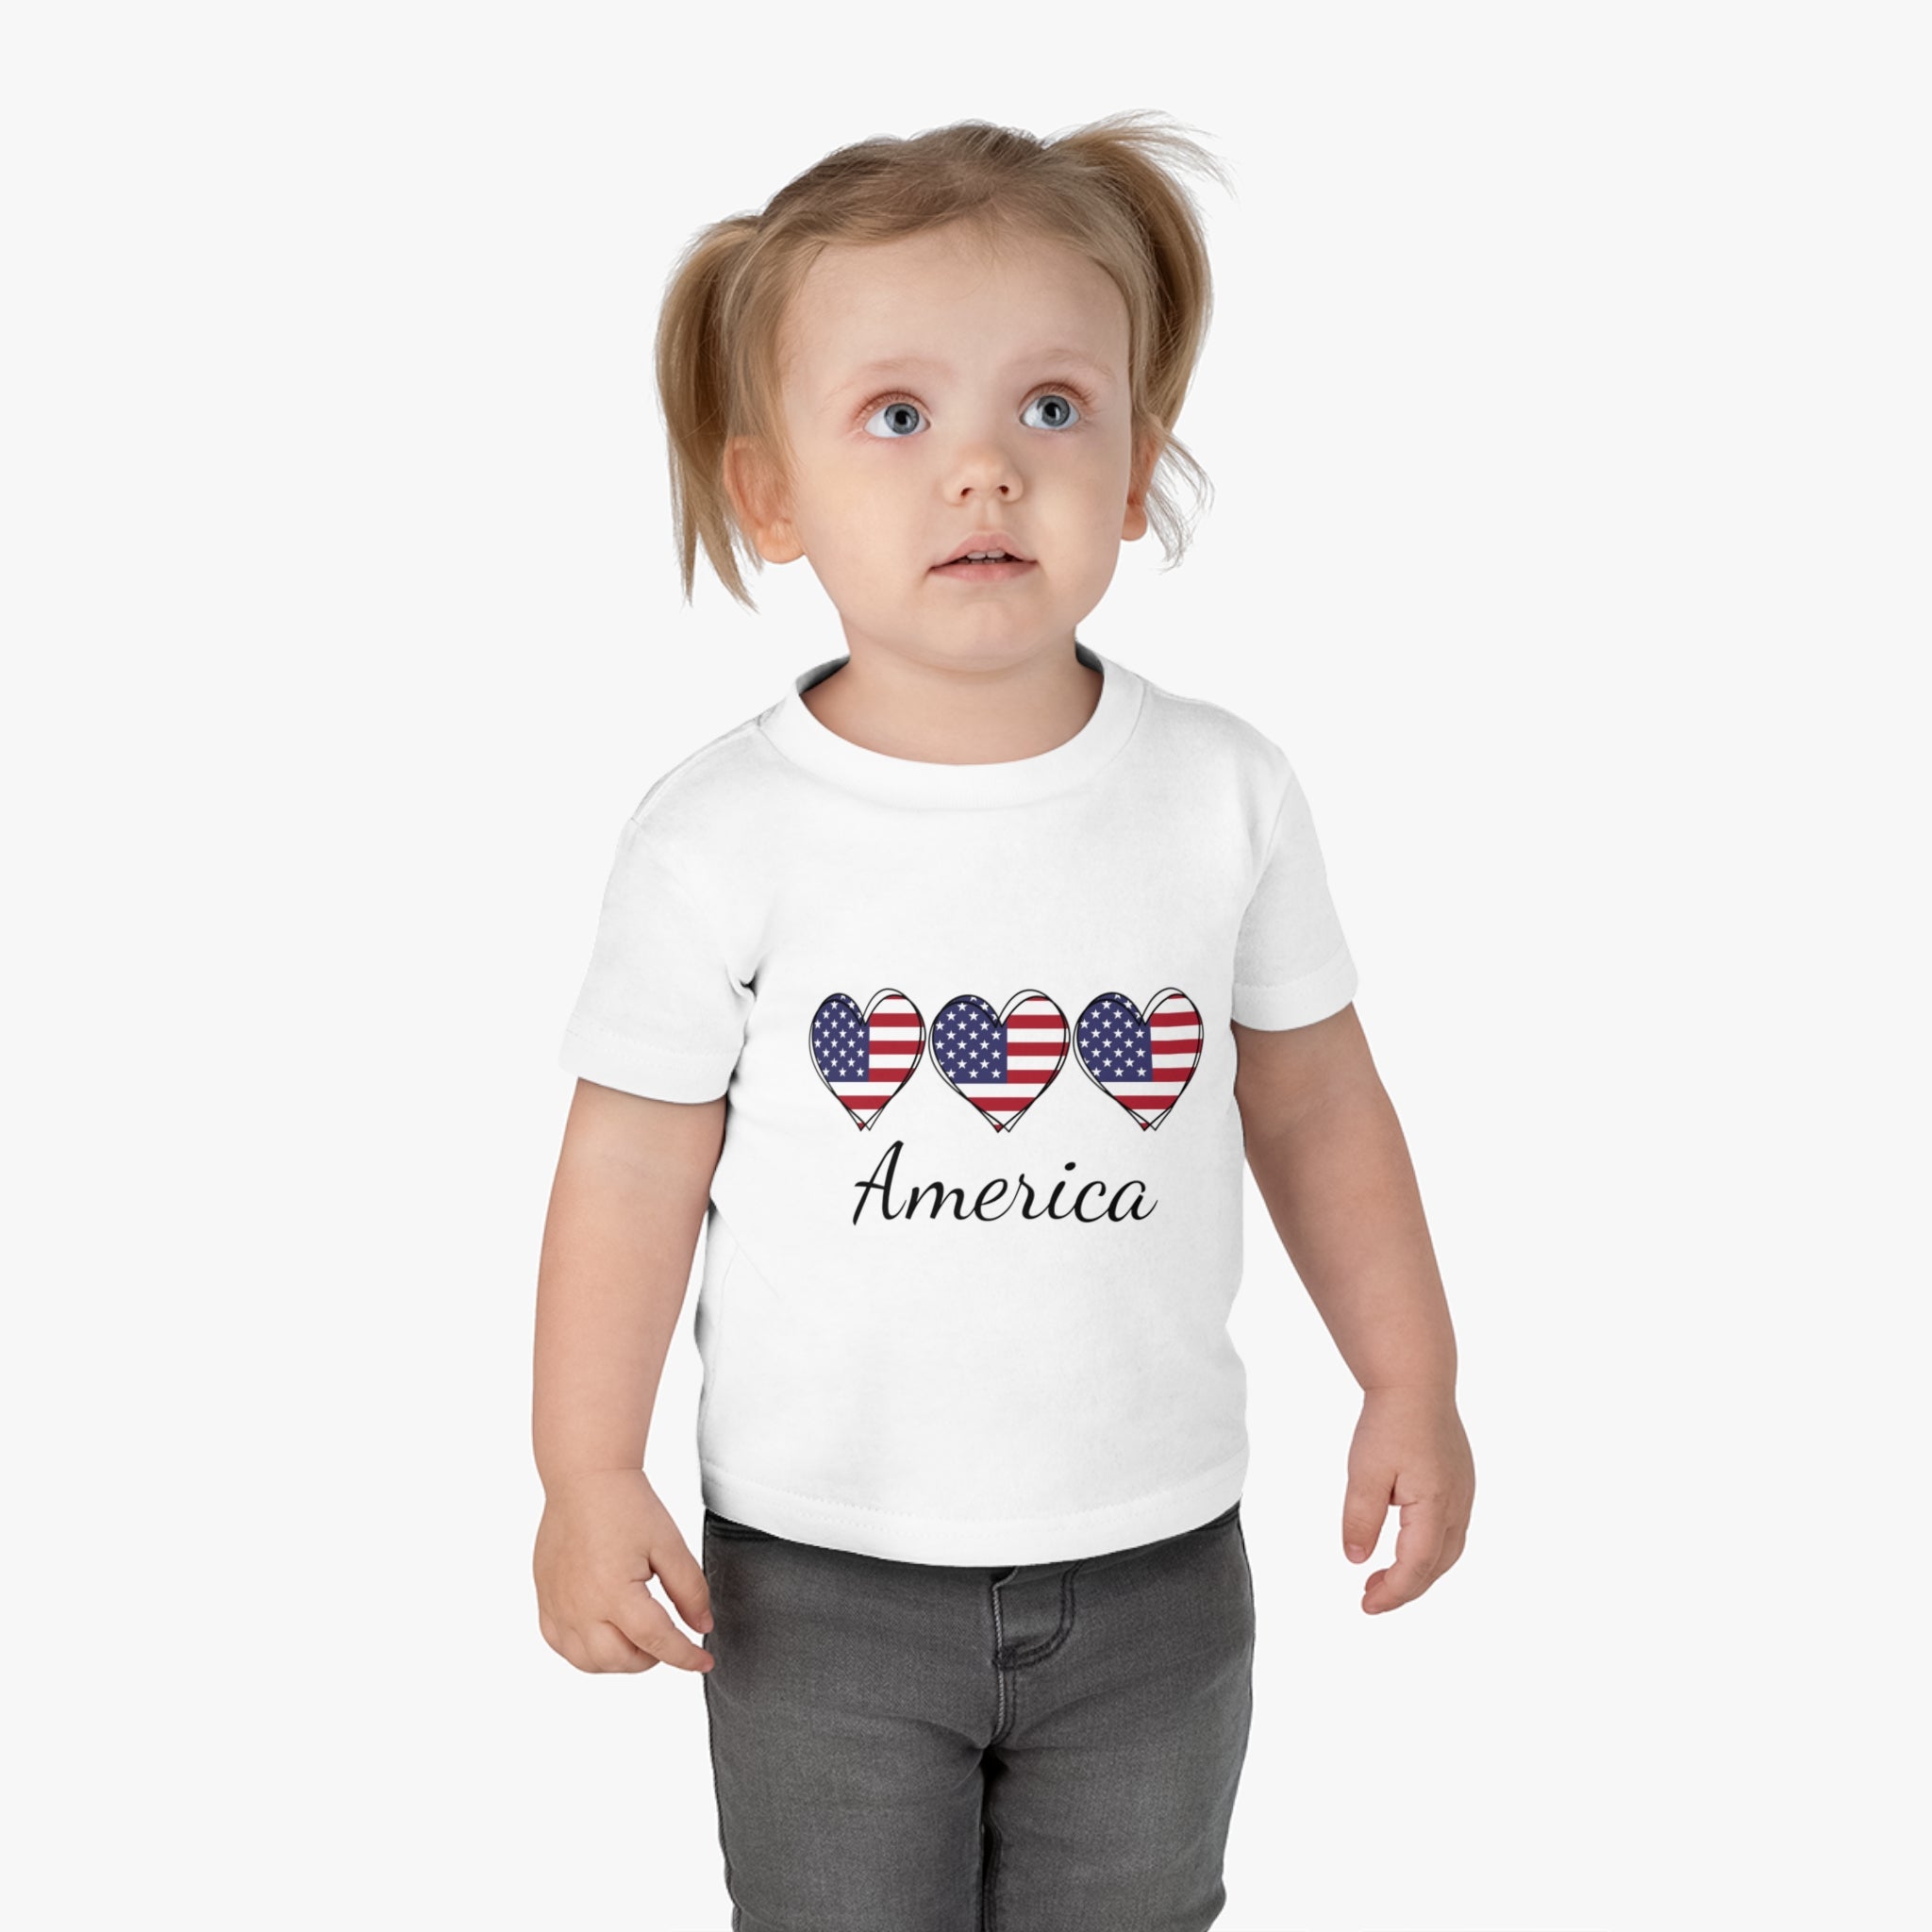 America 3 Hearts Infant Shirt, Baby Tee, Infant Tee